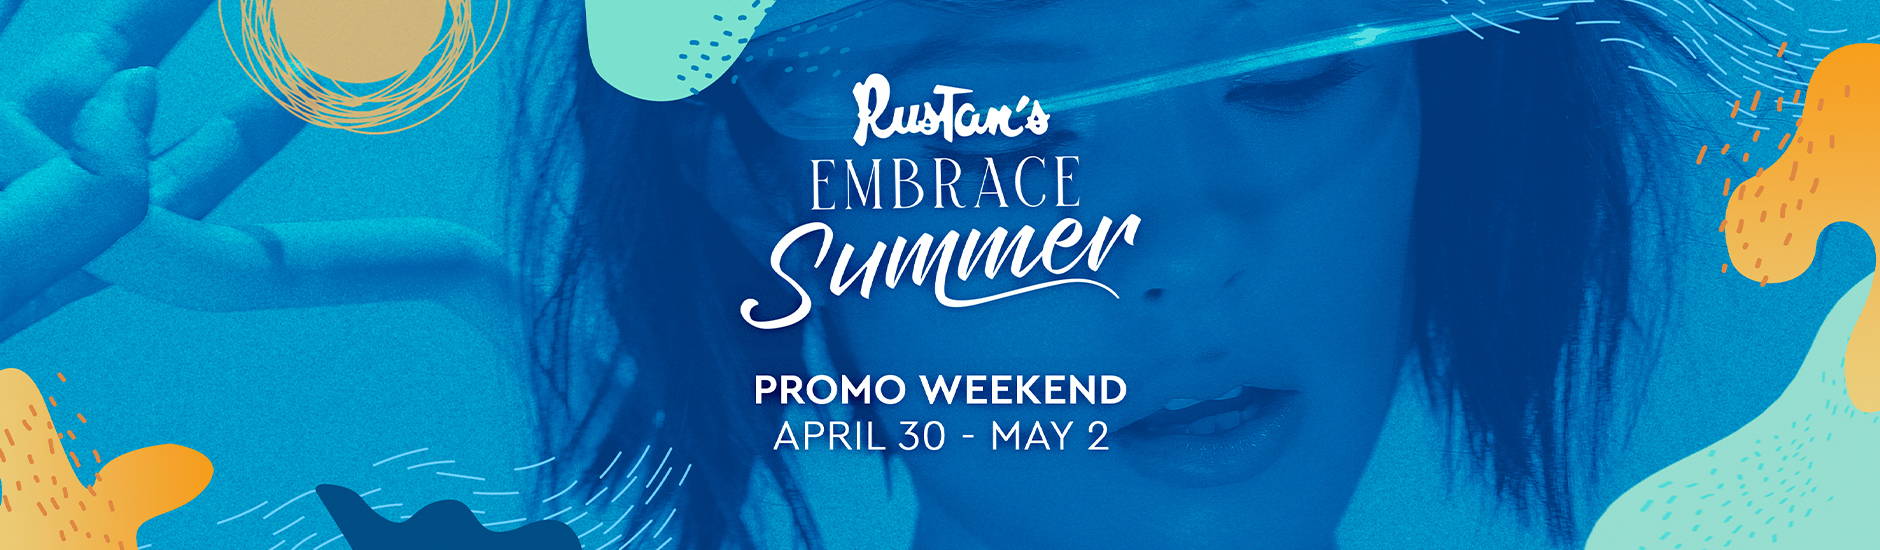 Embrace Summer Promo Weekend